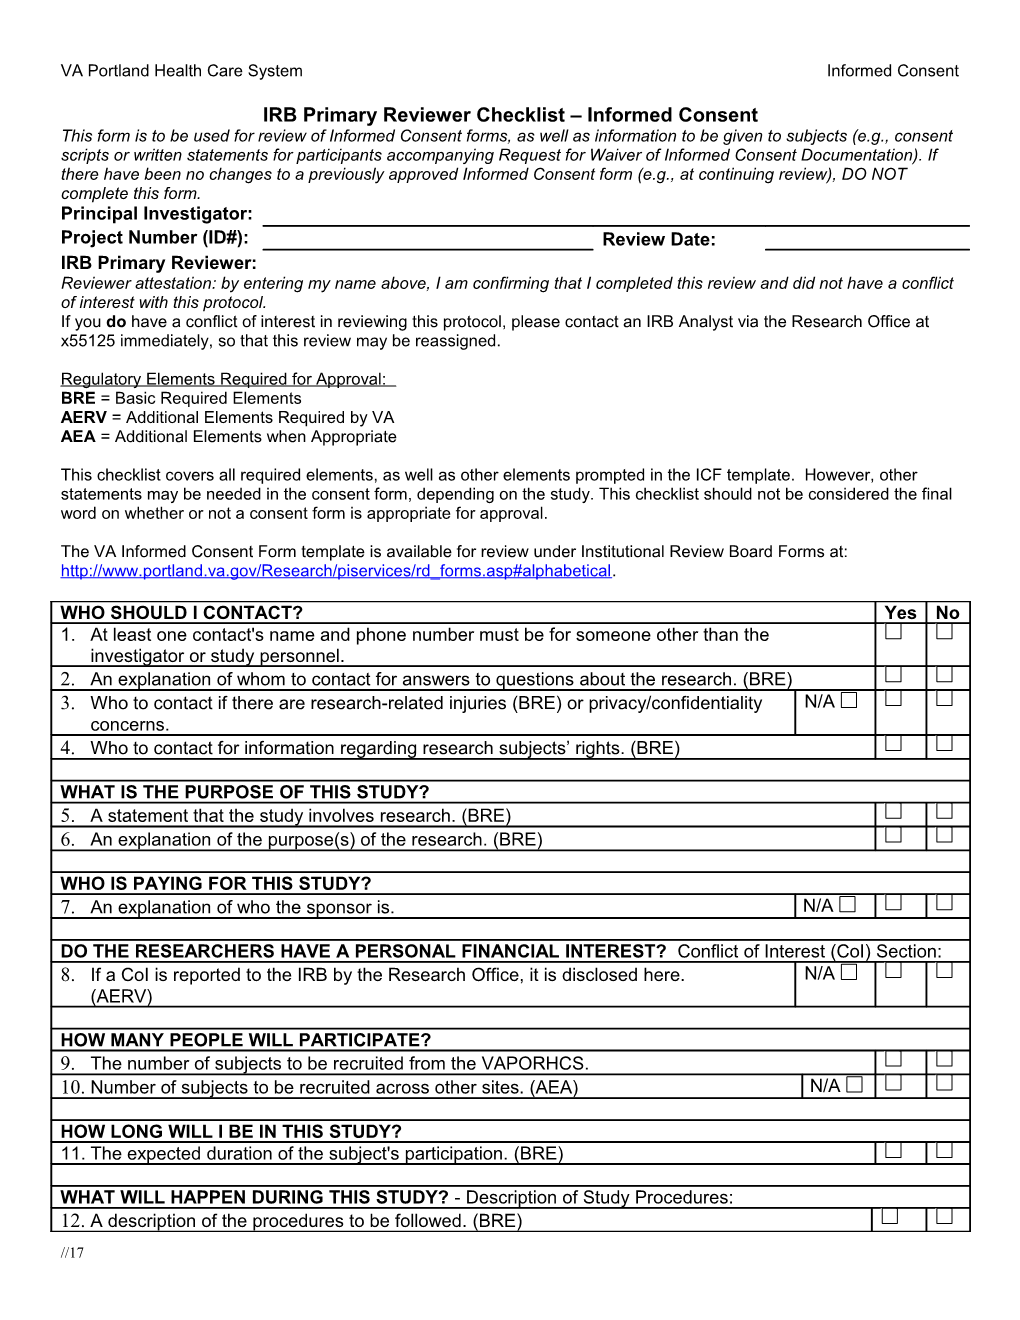 IRB Primary Reviewer Checklist (Portland VA Medical Center)